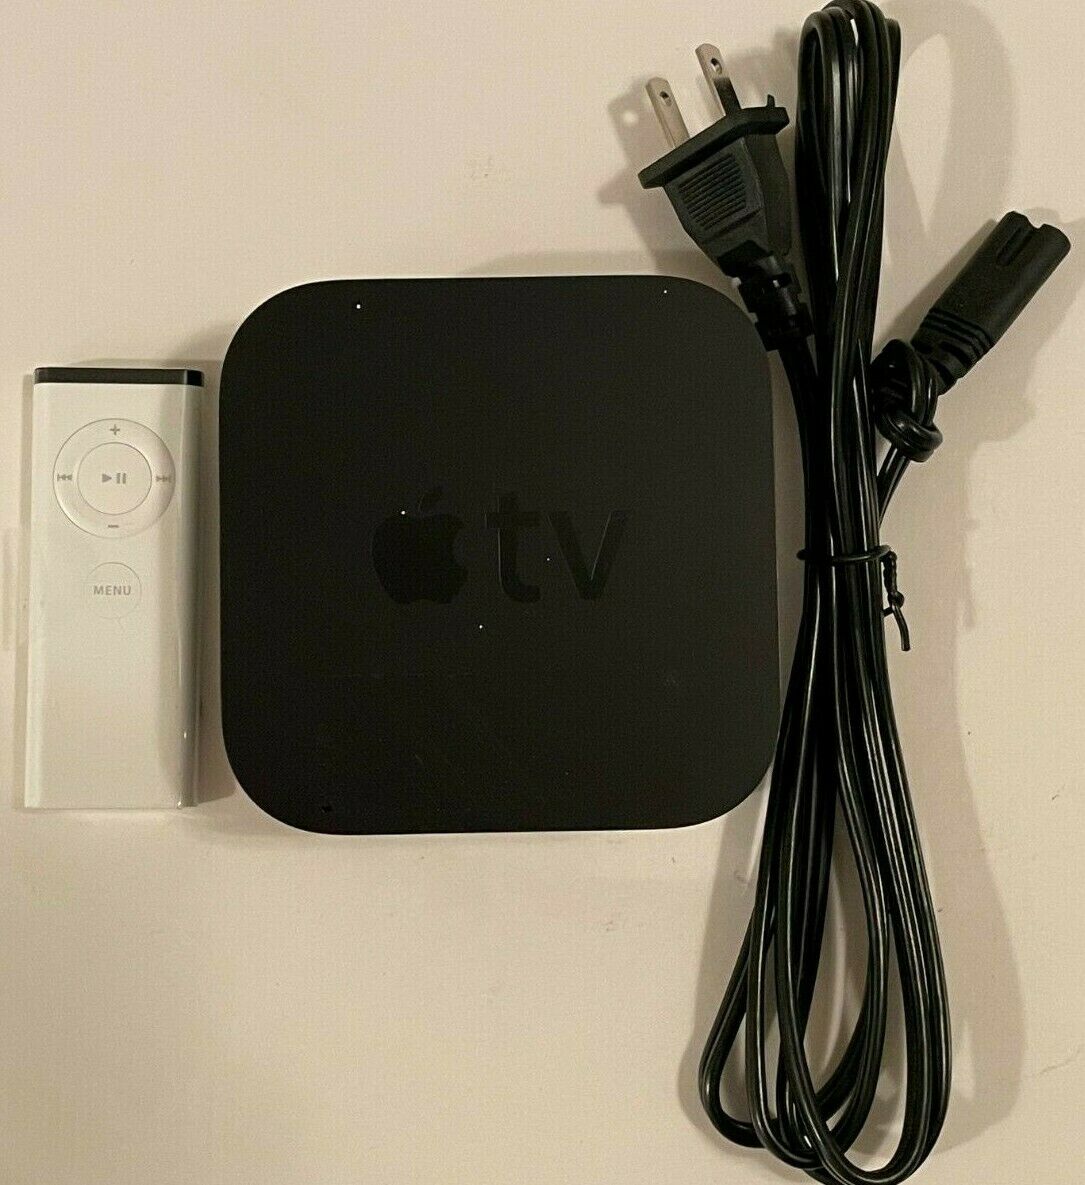 Apple Tv (3rd Generation) 8gb Hd Media Streamer - A1469, Genuine Apple Remote